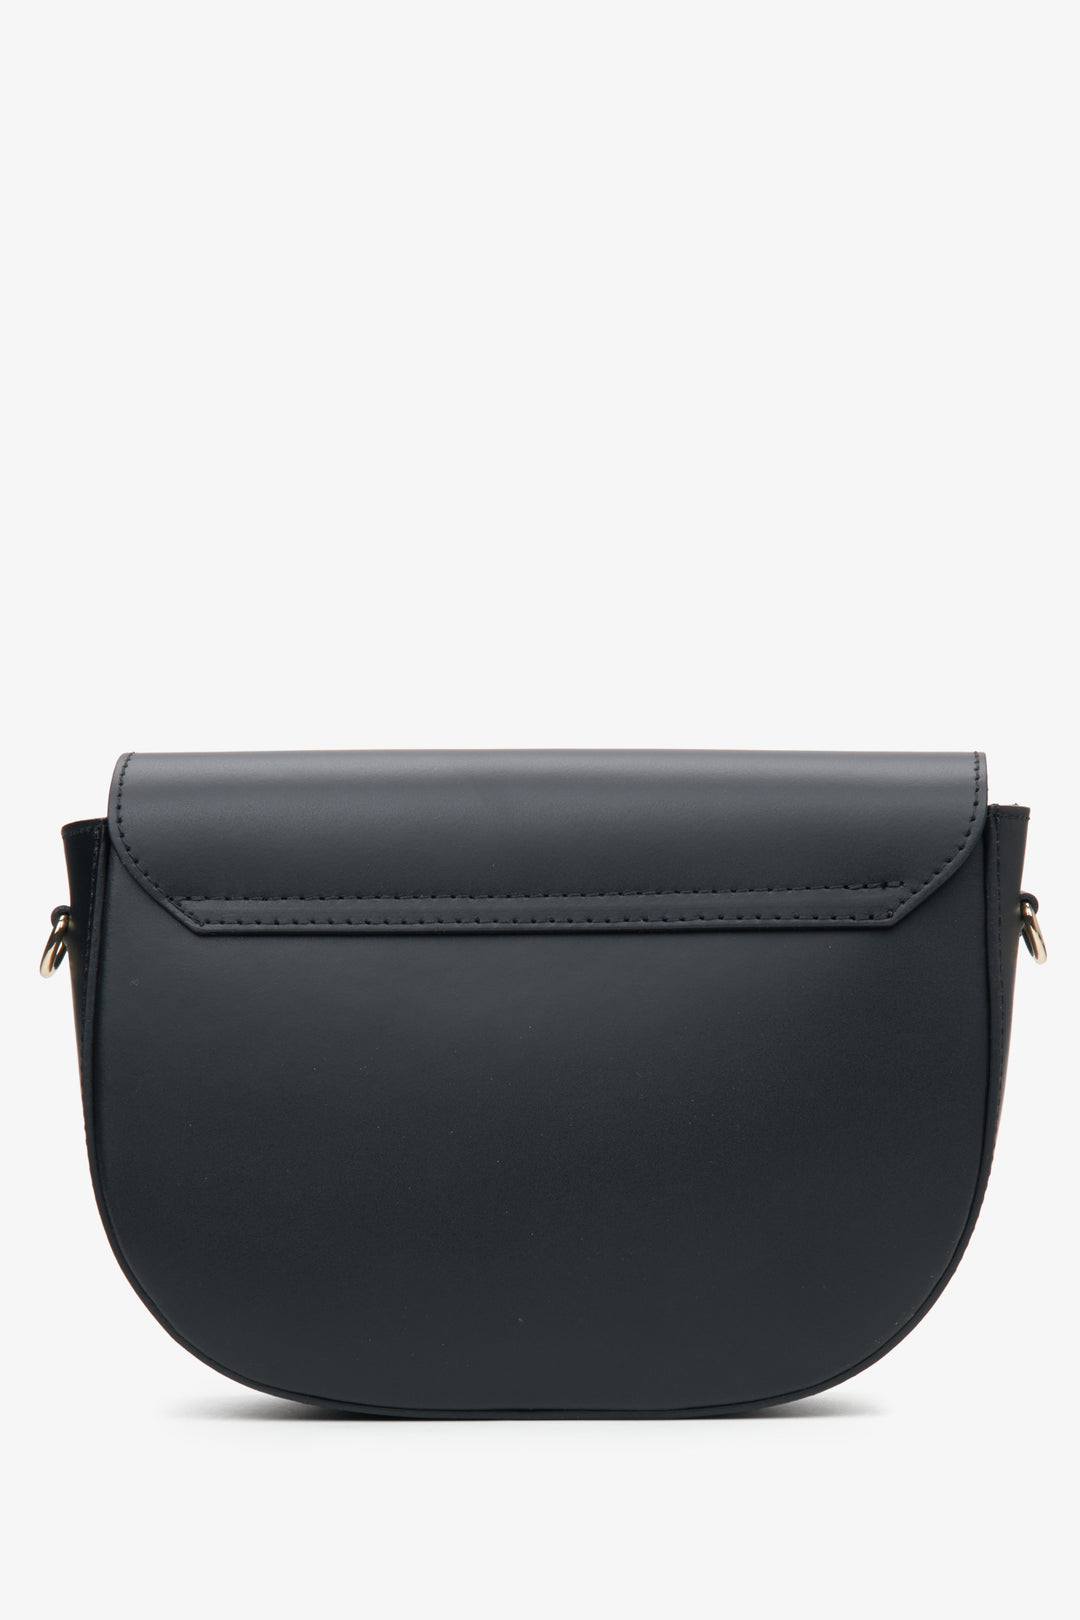 Estro black semi-circle women's handbag made of Italian genuine leather - back view of the model.